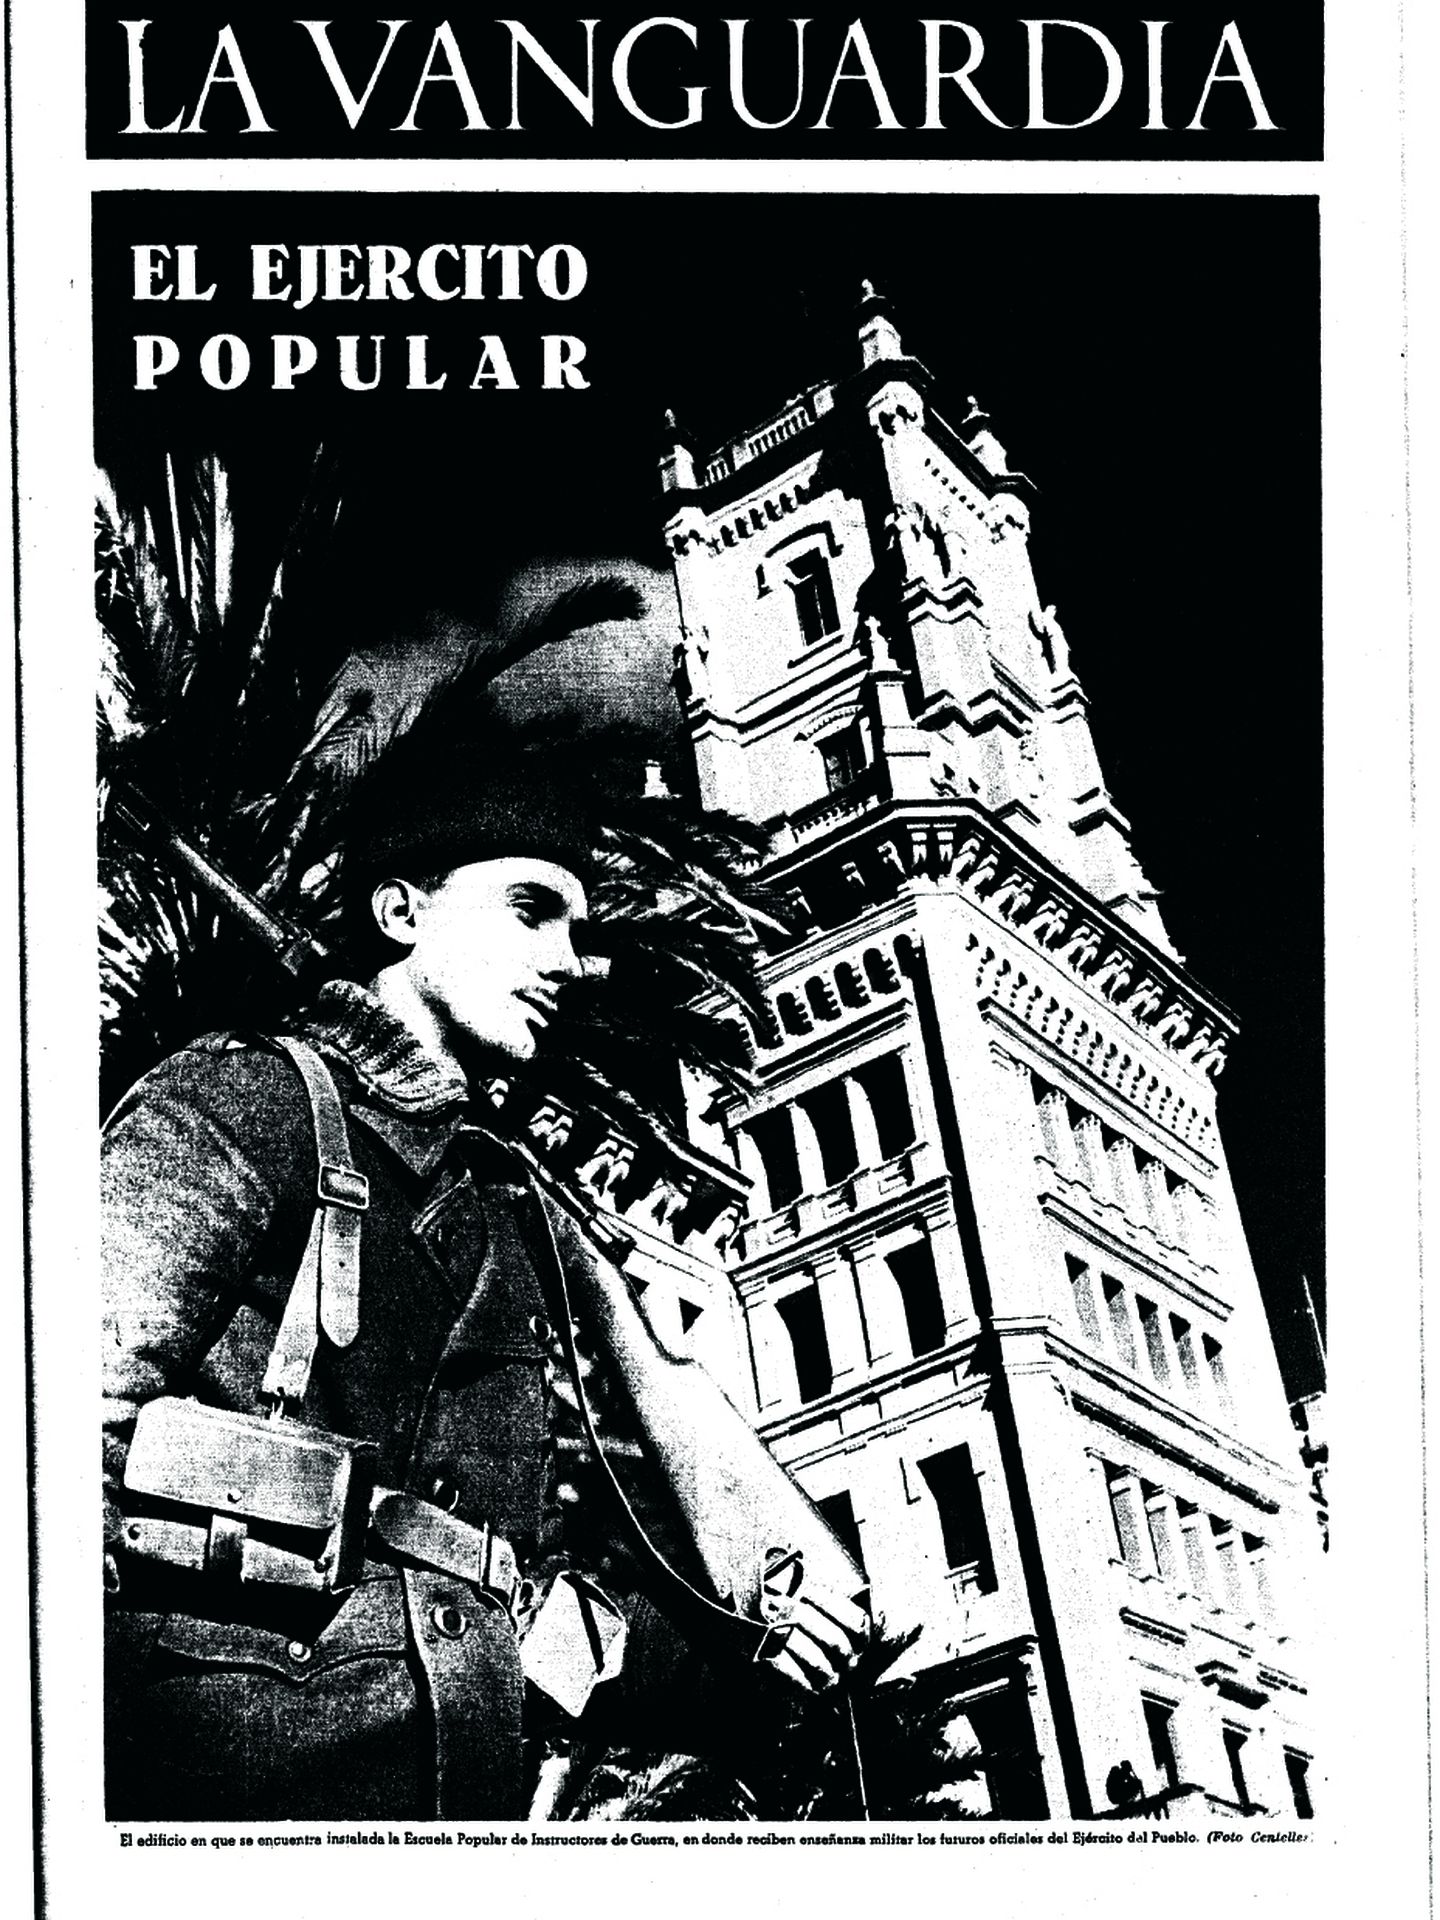 Portada de La Vanguardia, 24 enero de 1937, con foto de Centelles.